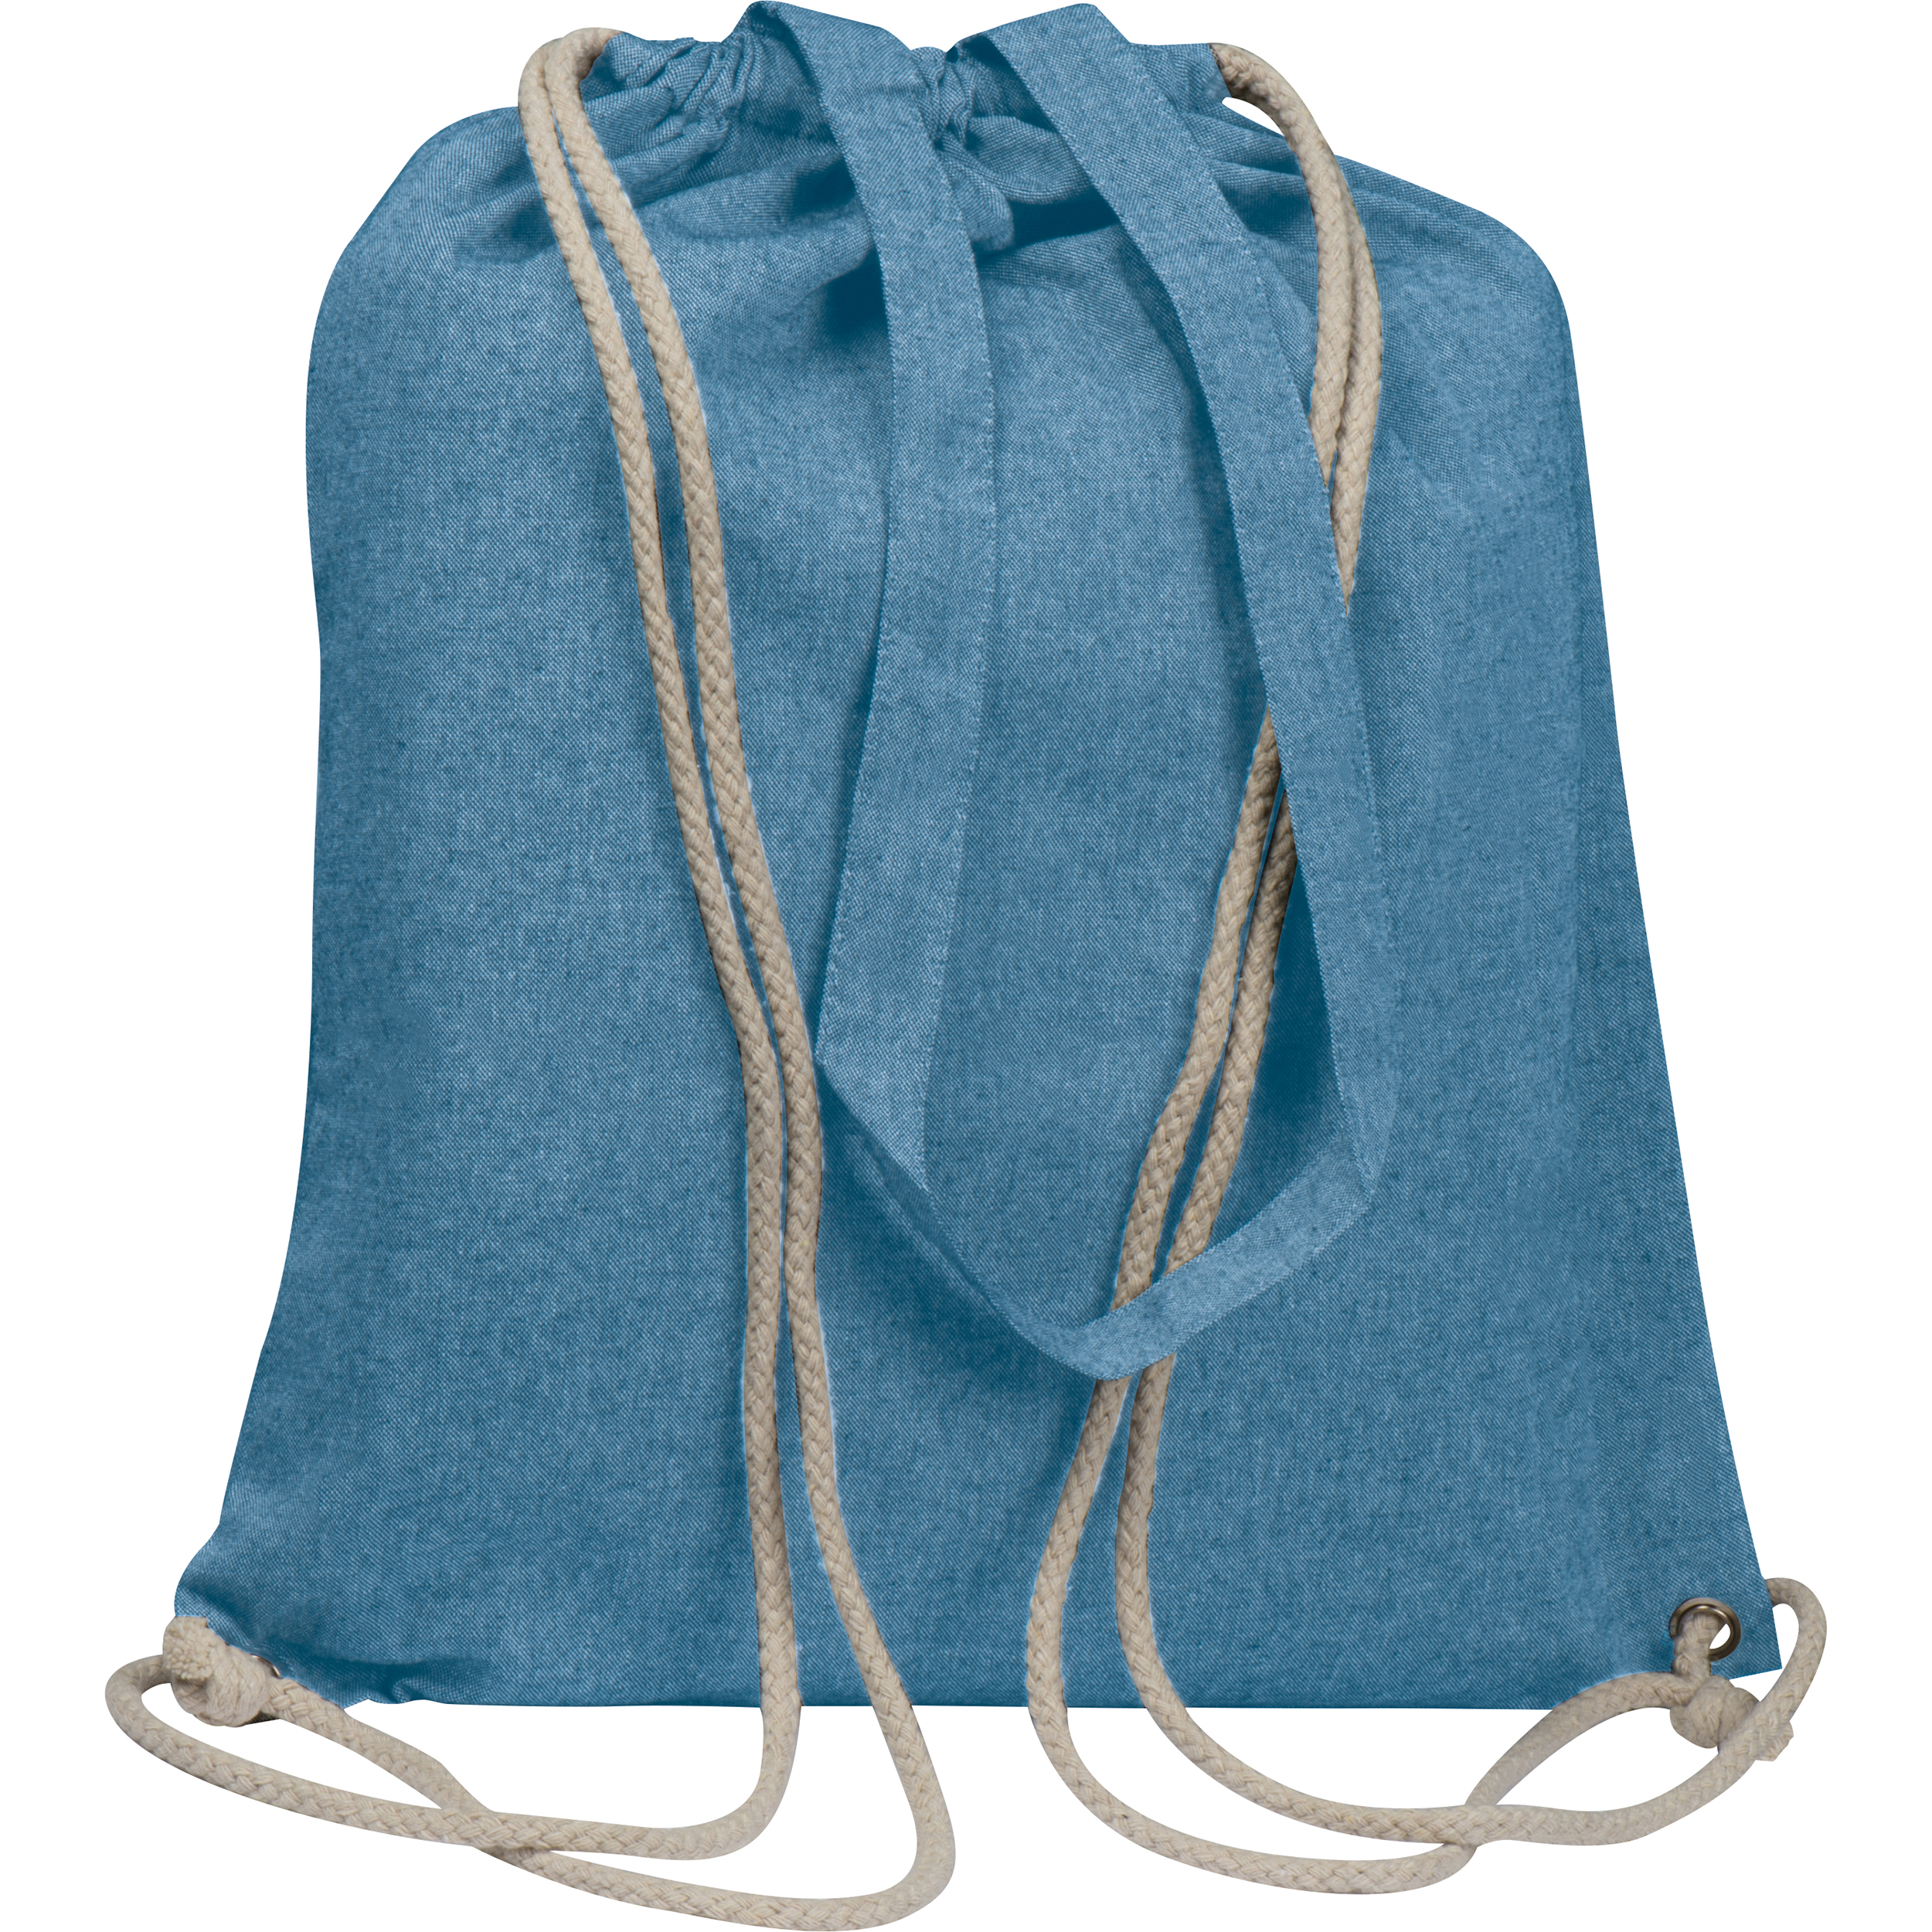 Gym-Cottonbag aus recycelter Baumwolle